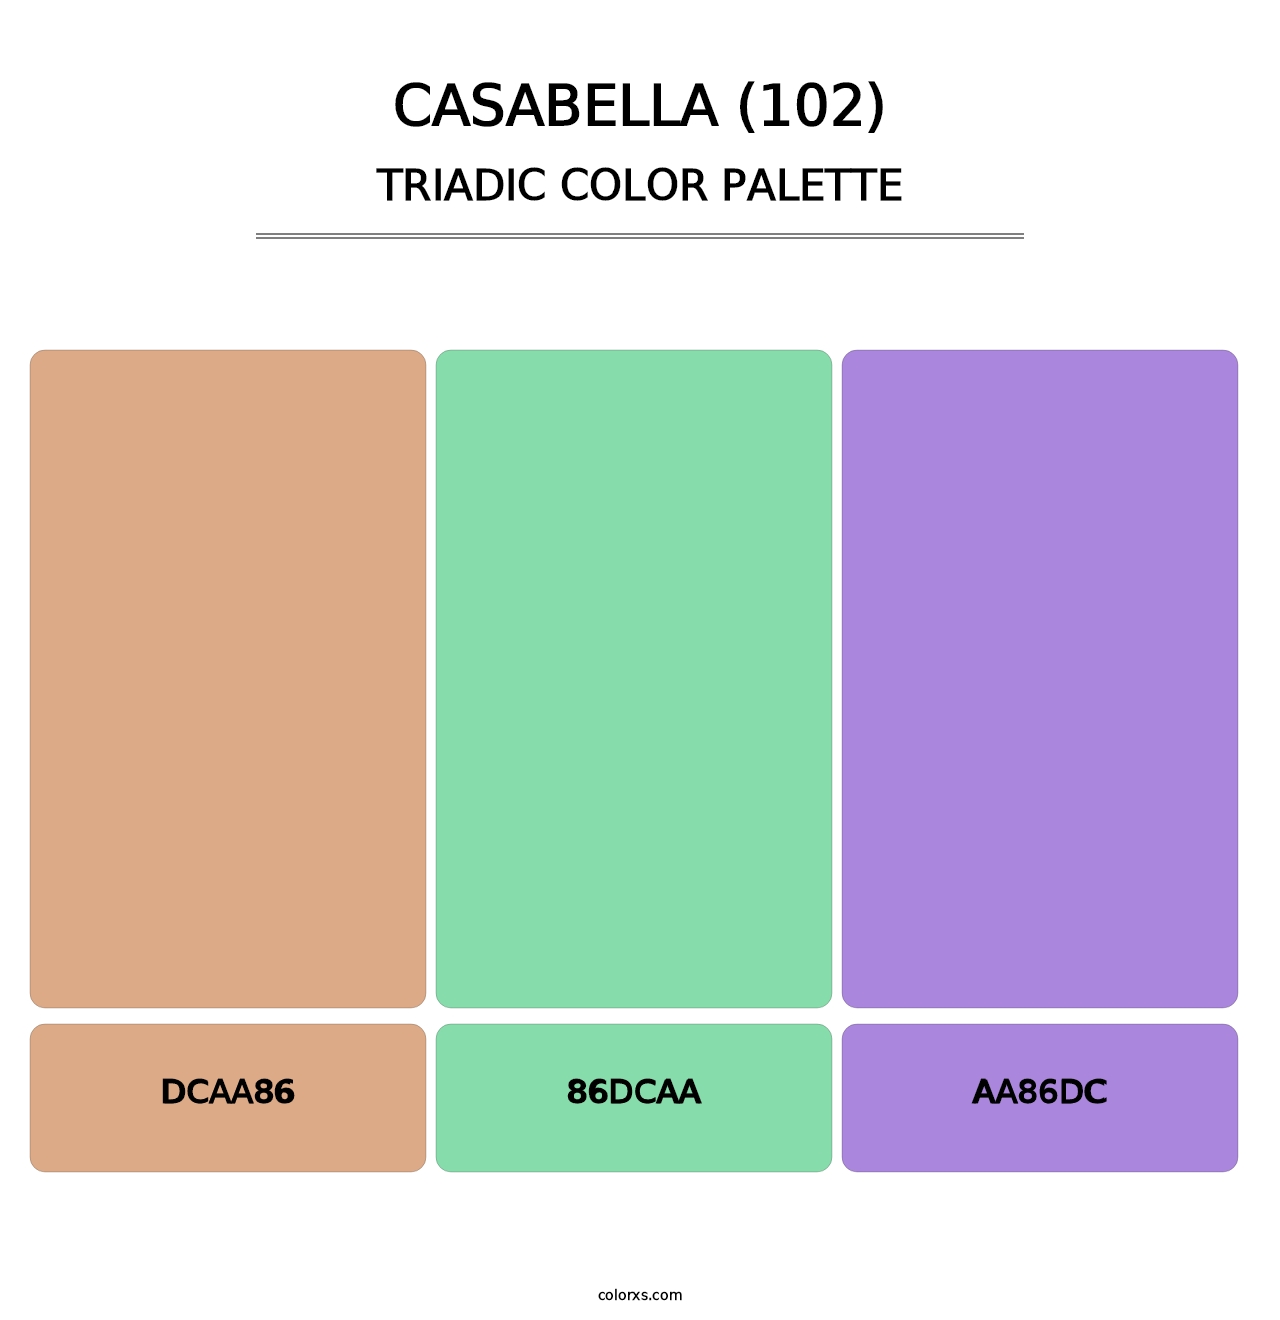 Casabella (102) - Triadic Color Palette